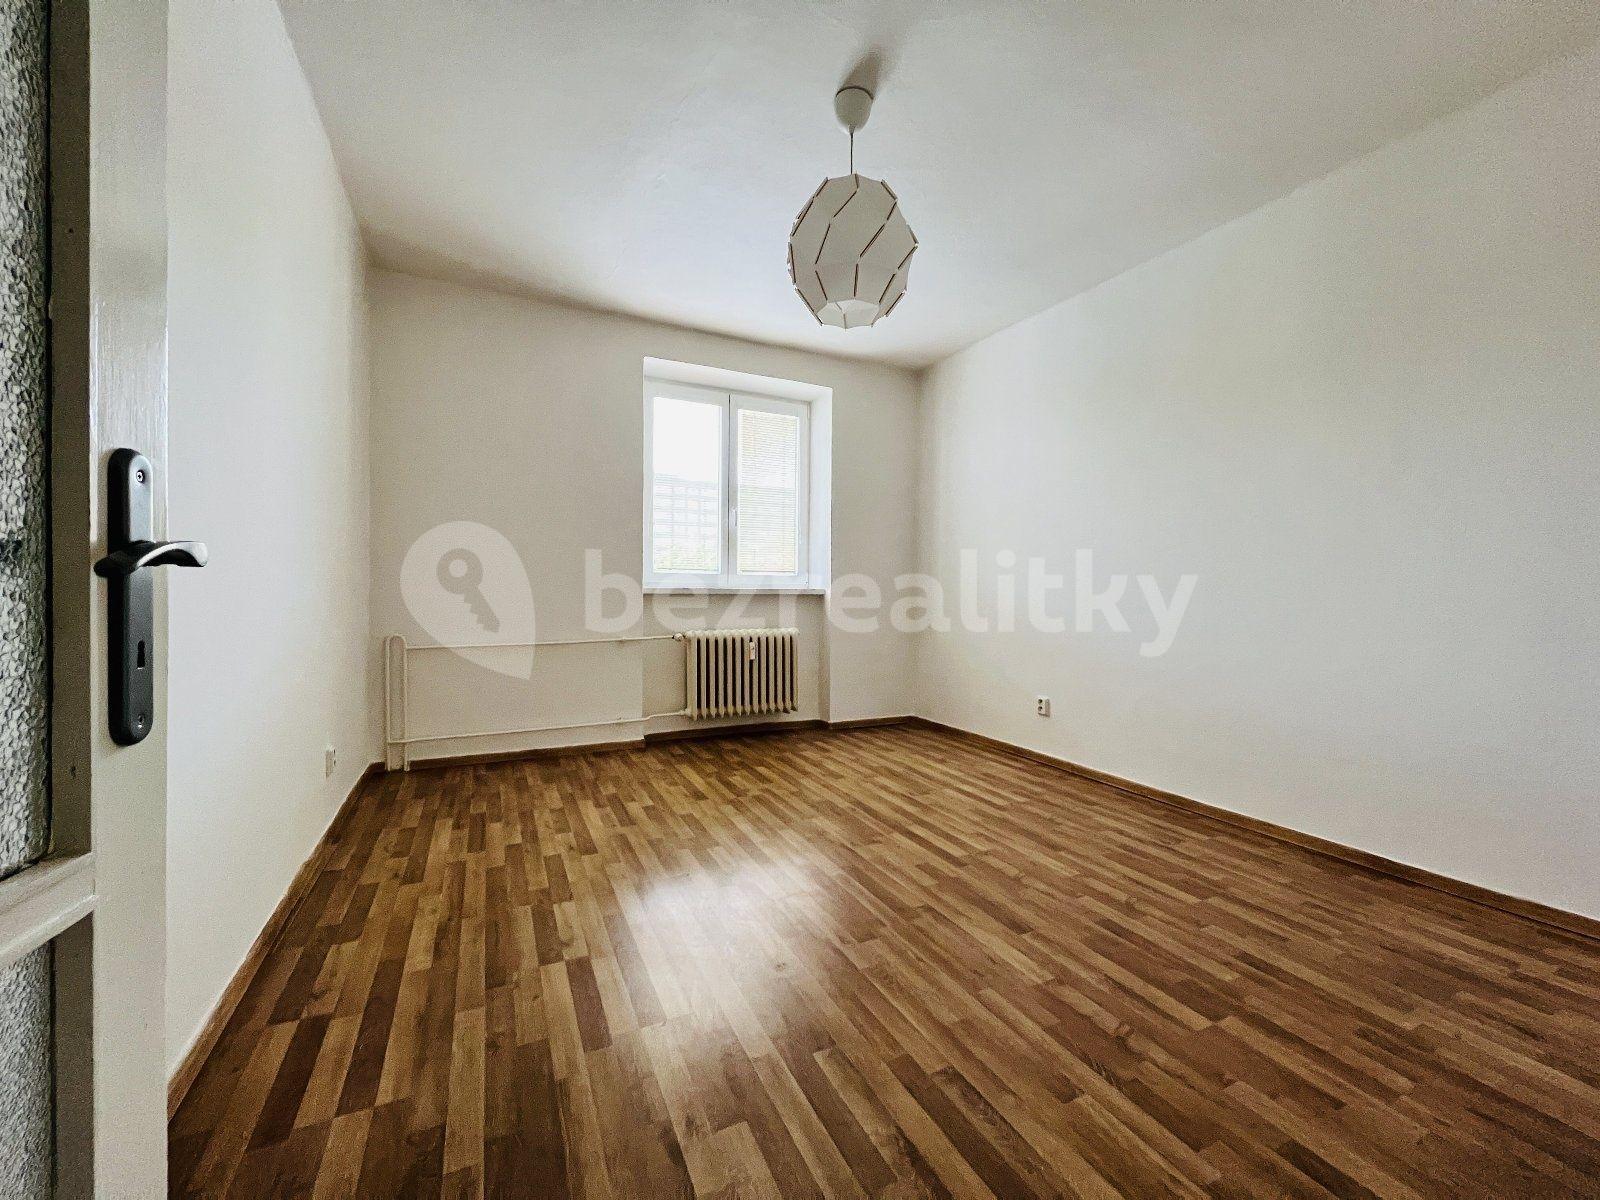 2 bedroom flat to rent, 57 m², 17. listopadu, Ostrava, Moravskoslezský Region